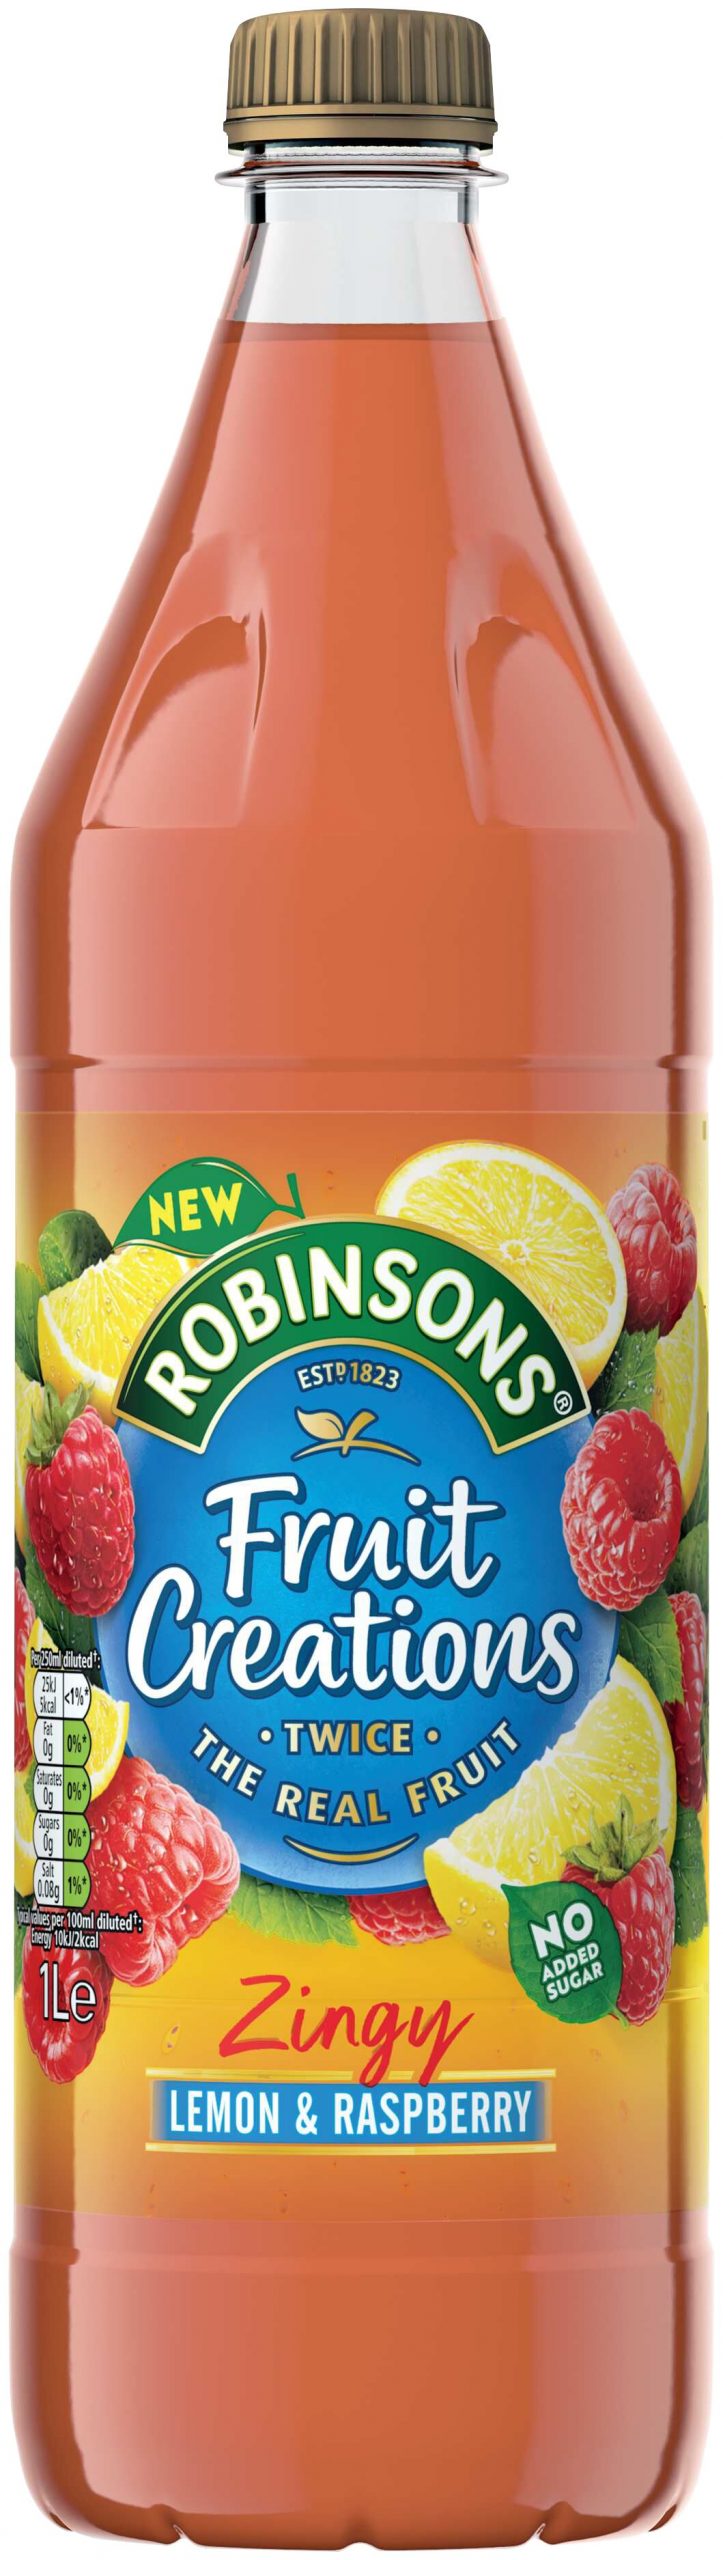 Robinsons refreshes Fruit Creations range